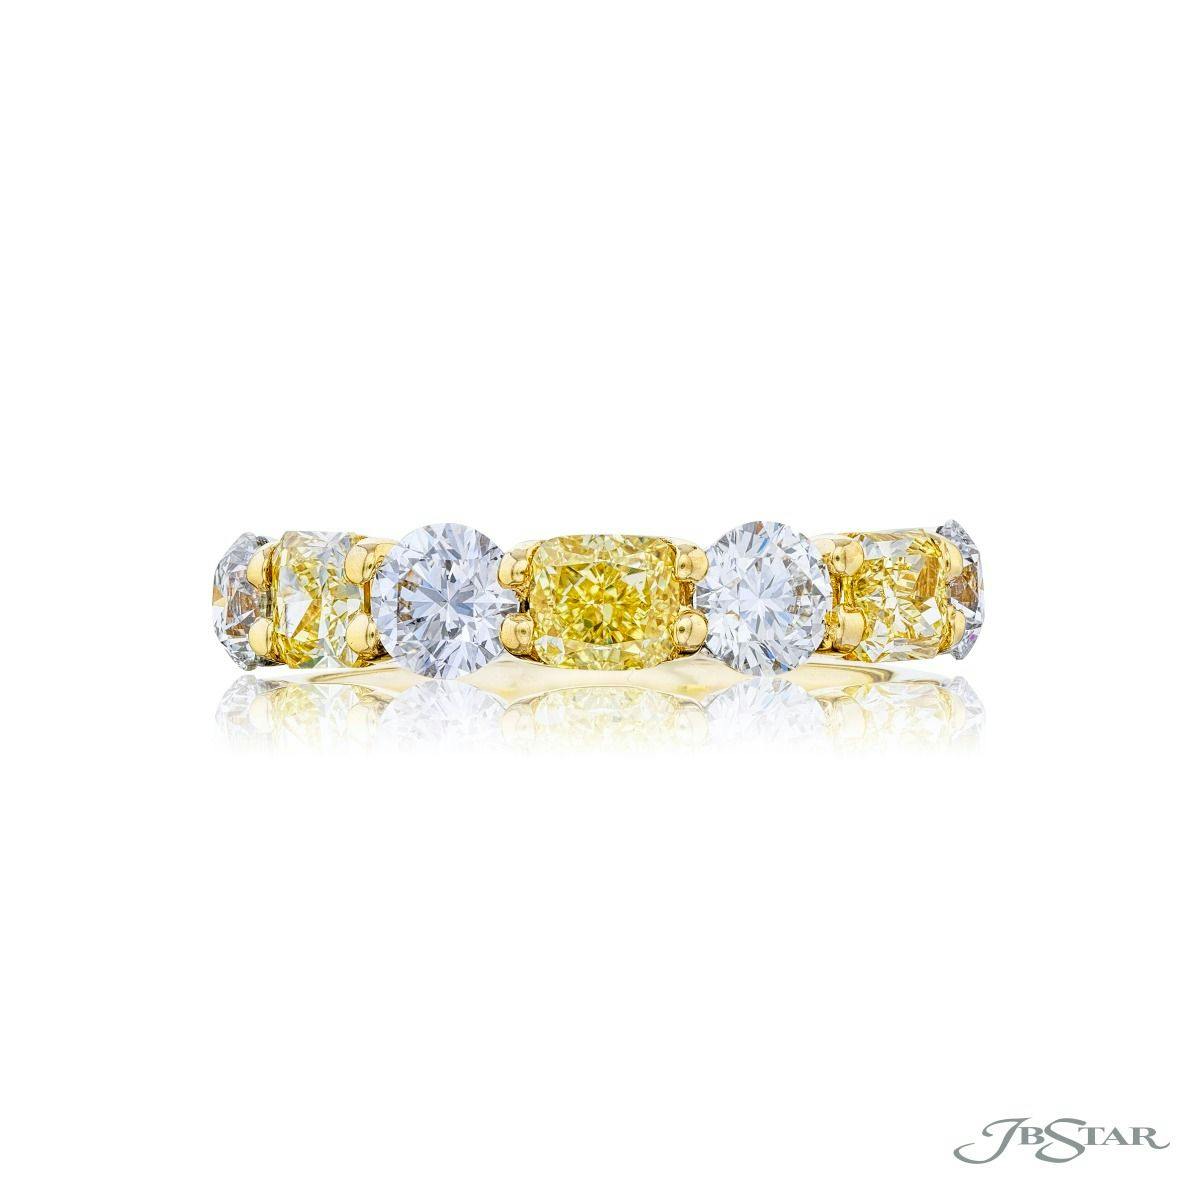 J.B. Star 18k Yellow Gold & Platinum Fancy Yellow Diamond Ring